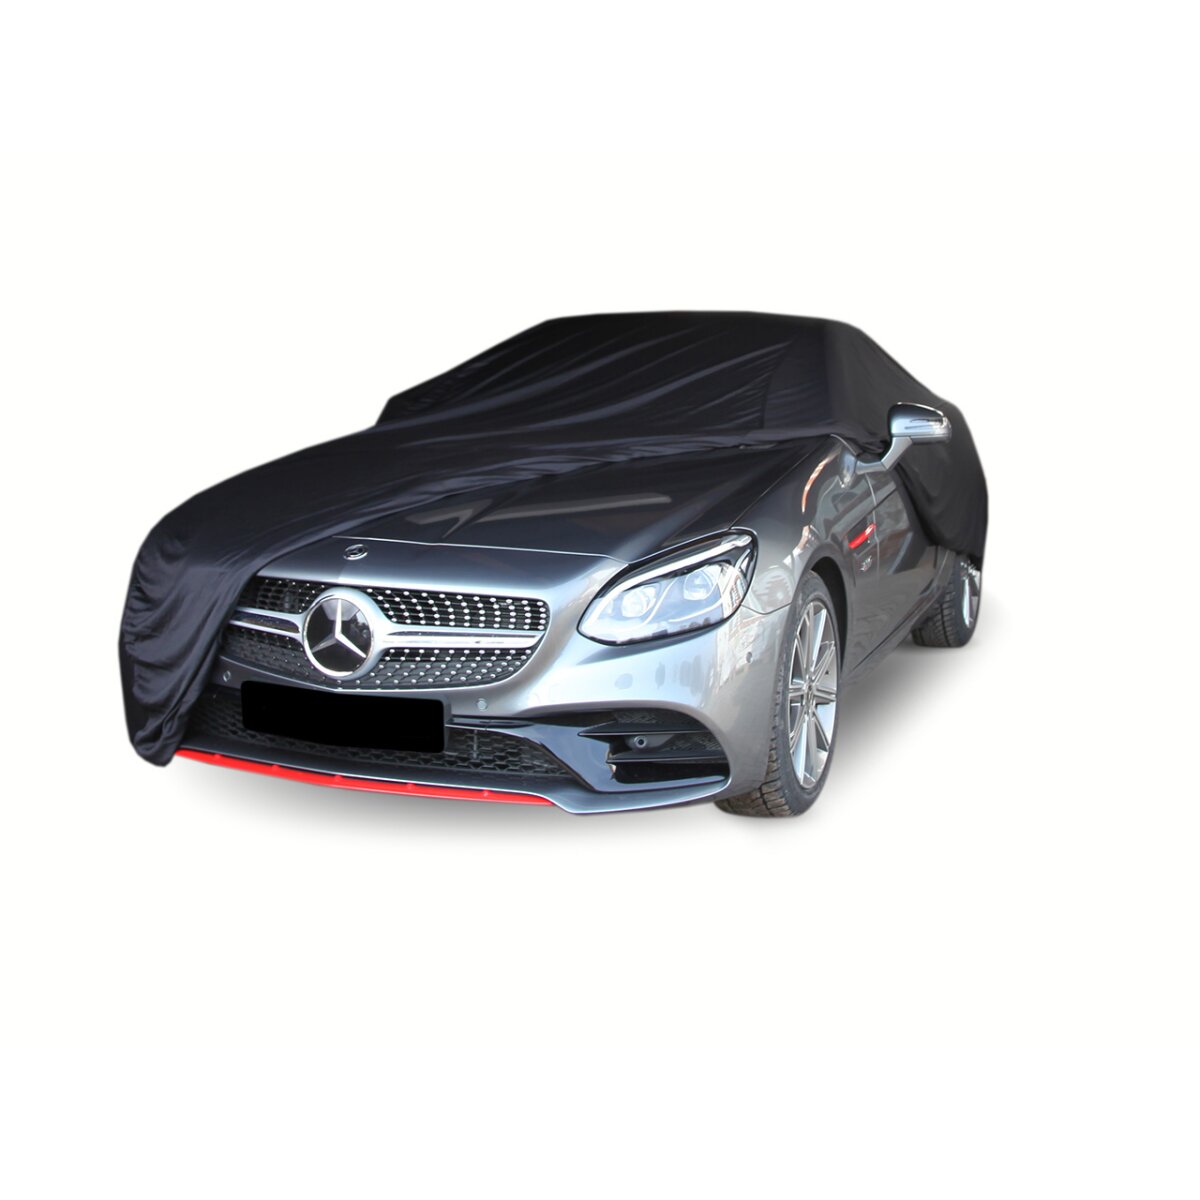 https://www.autoabdeckung.com/media/image/product/11452/lg/autoabdeckung-soft-indoor-car-cover-fuer-audi-a3-cabriolet-8p.jpg